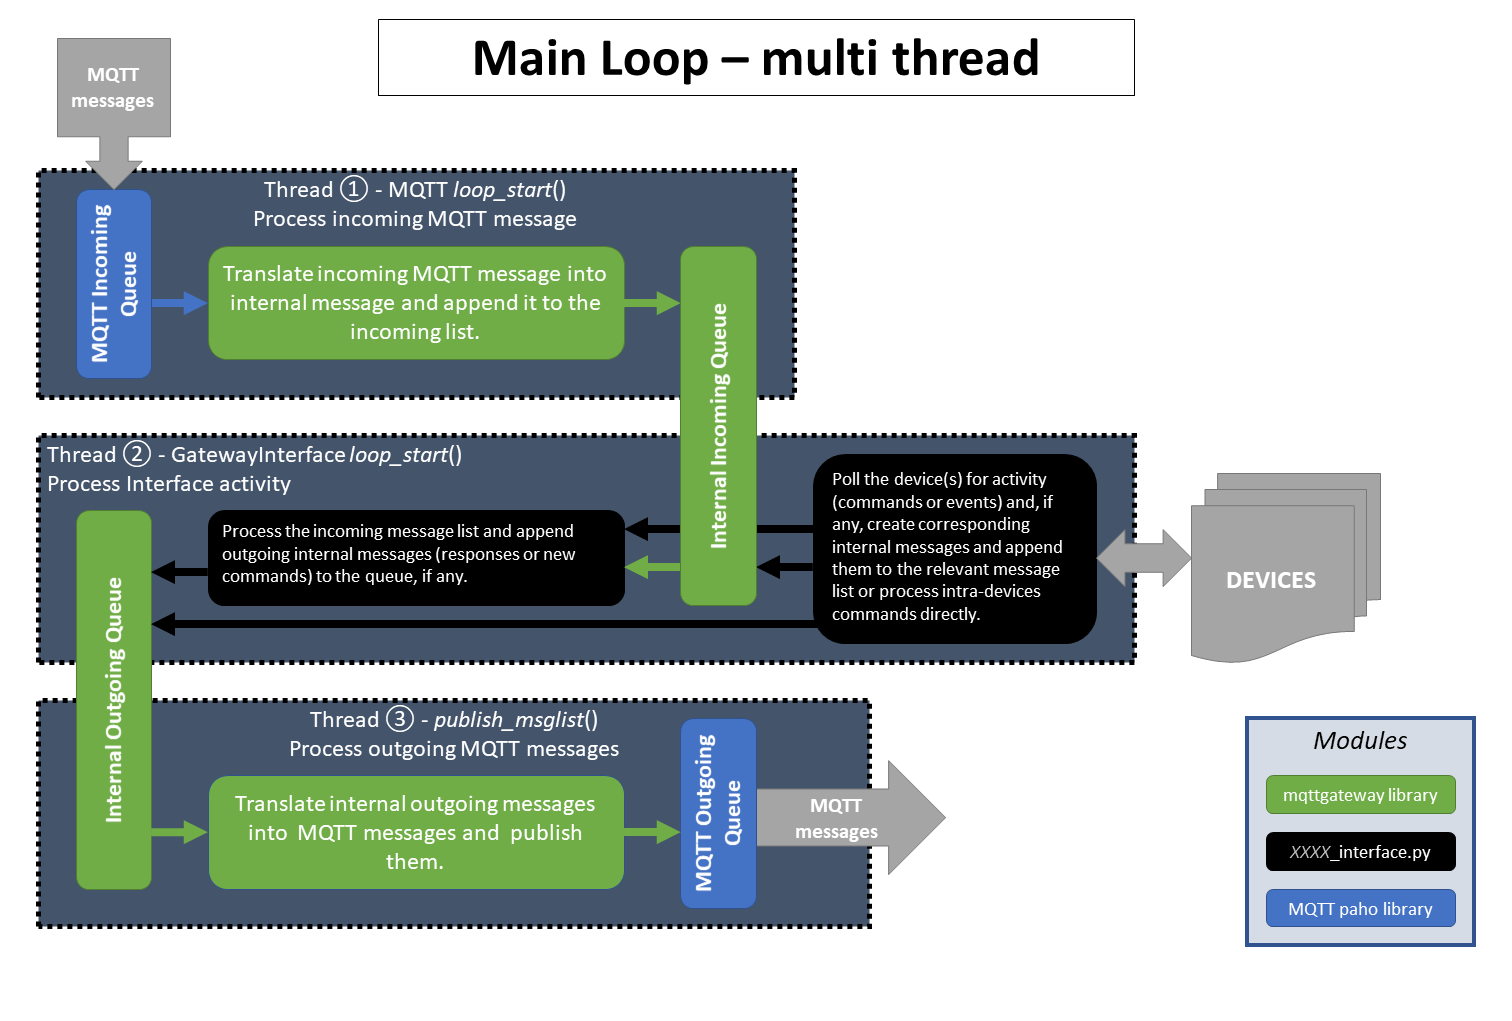 Loop architecture in multi thread mode